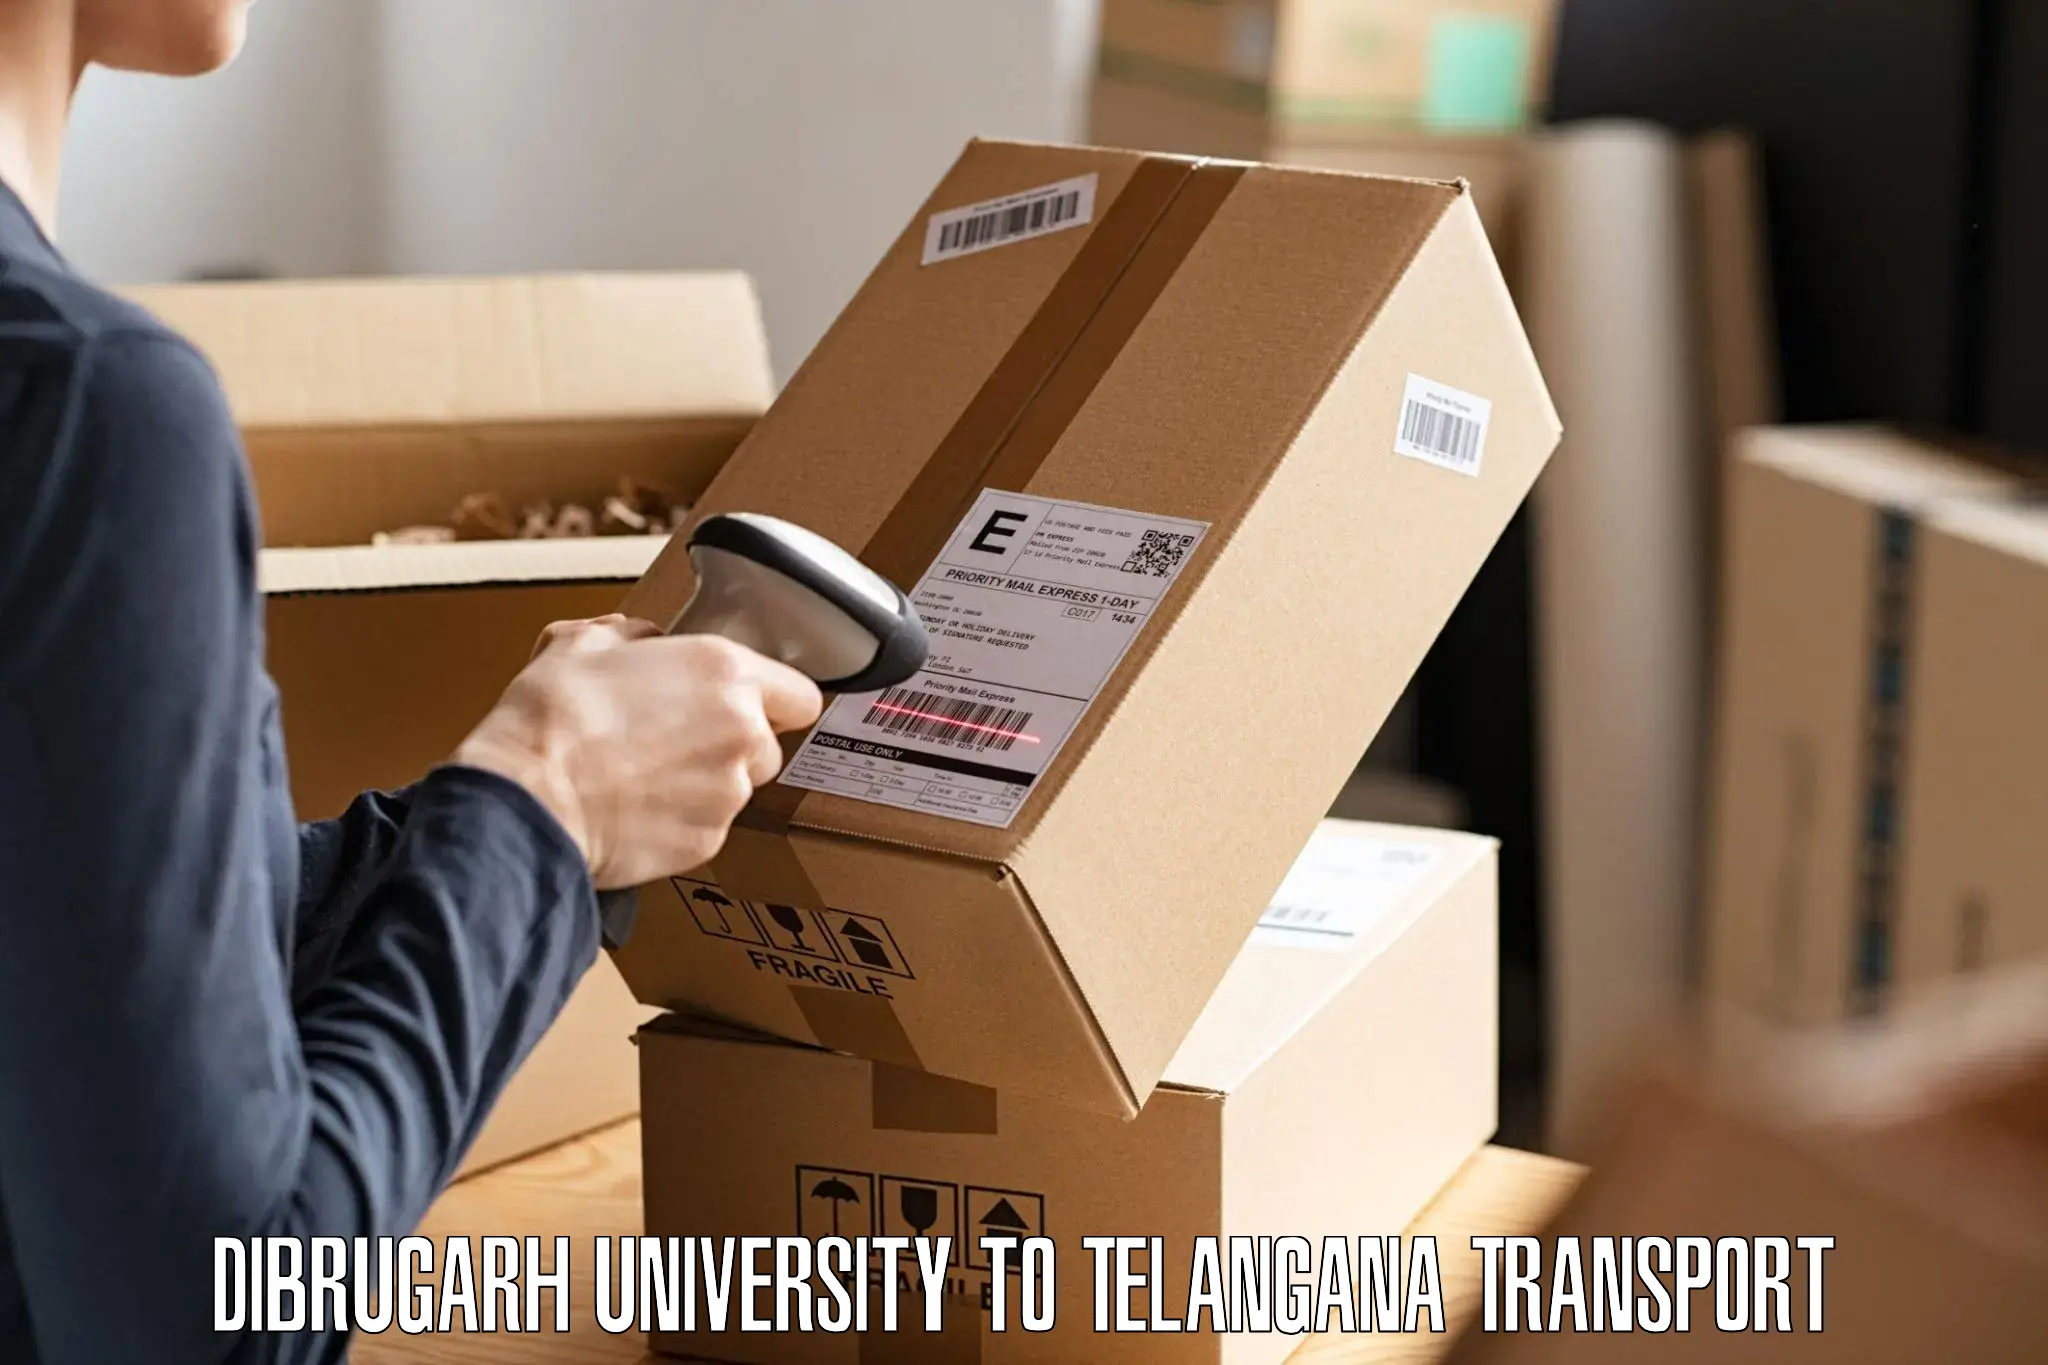 Daily transport service Dibrugarh University to Bejjanki